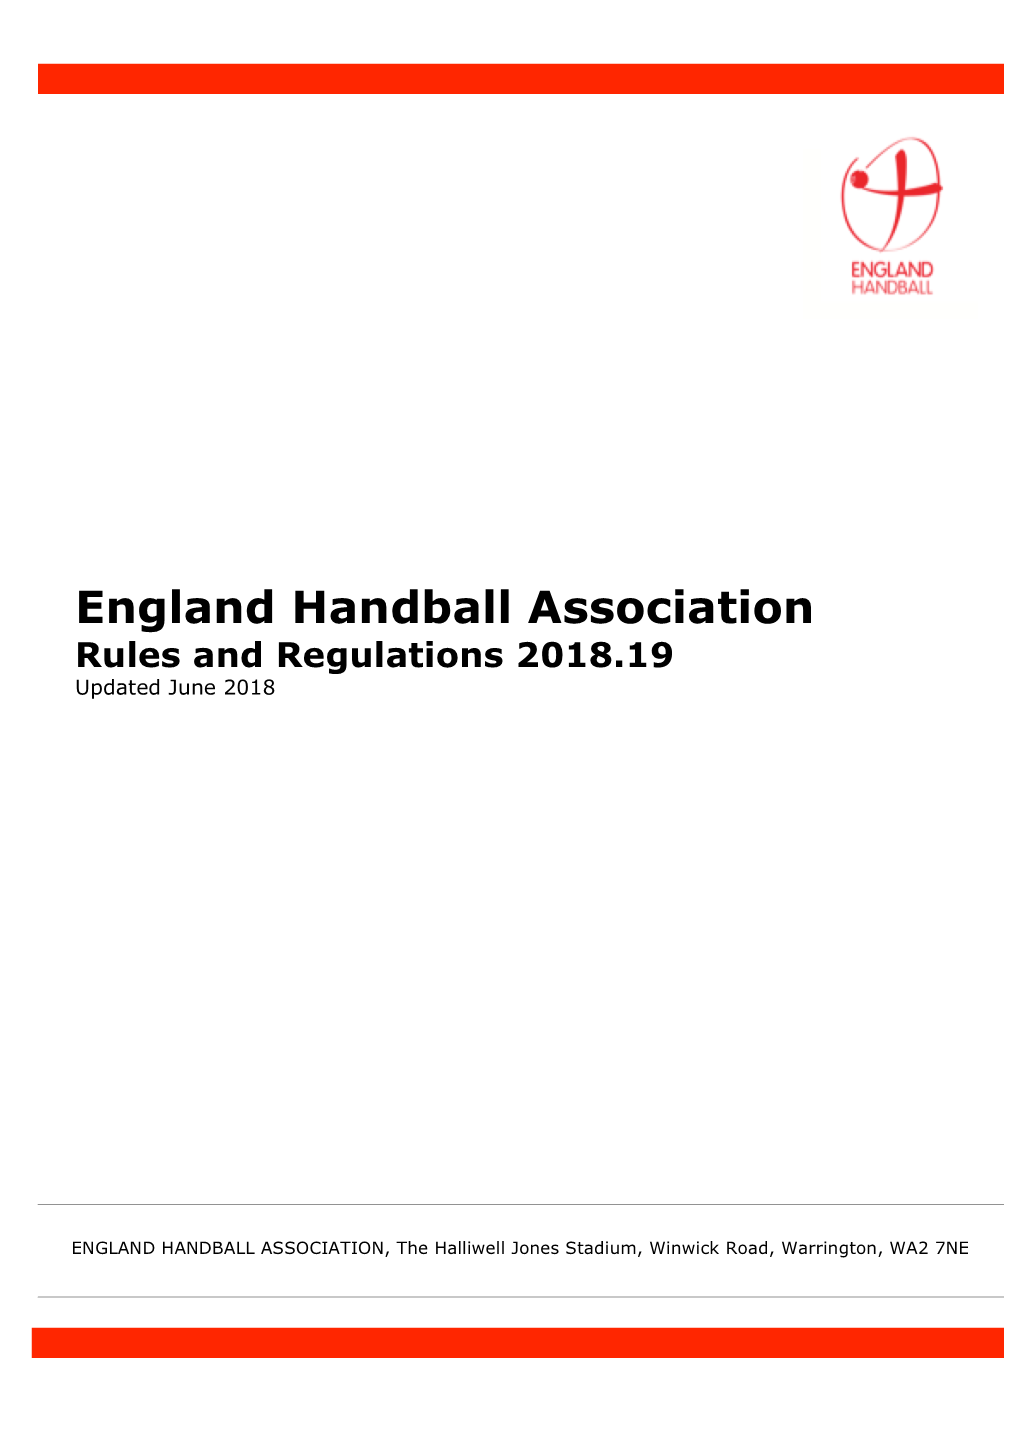 England Handball Rules and Regulations